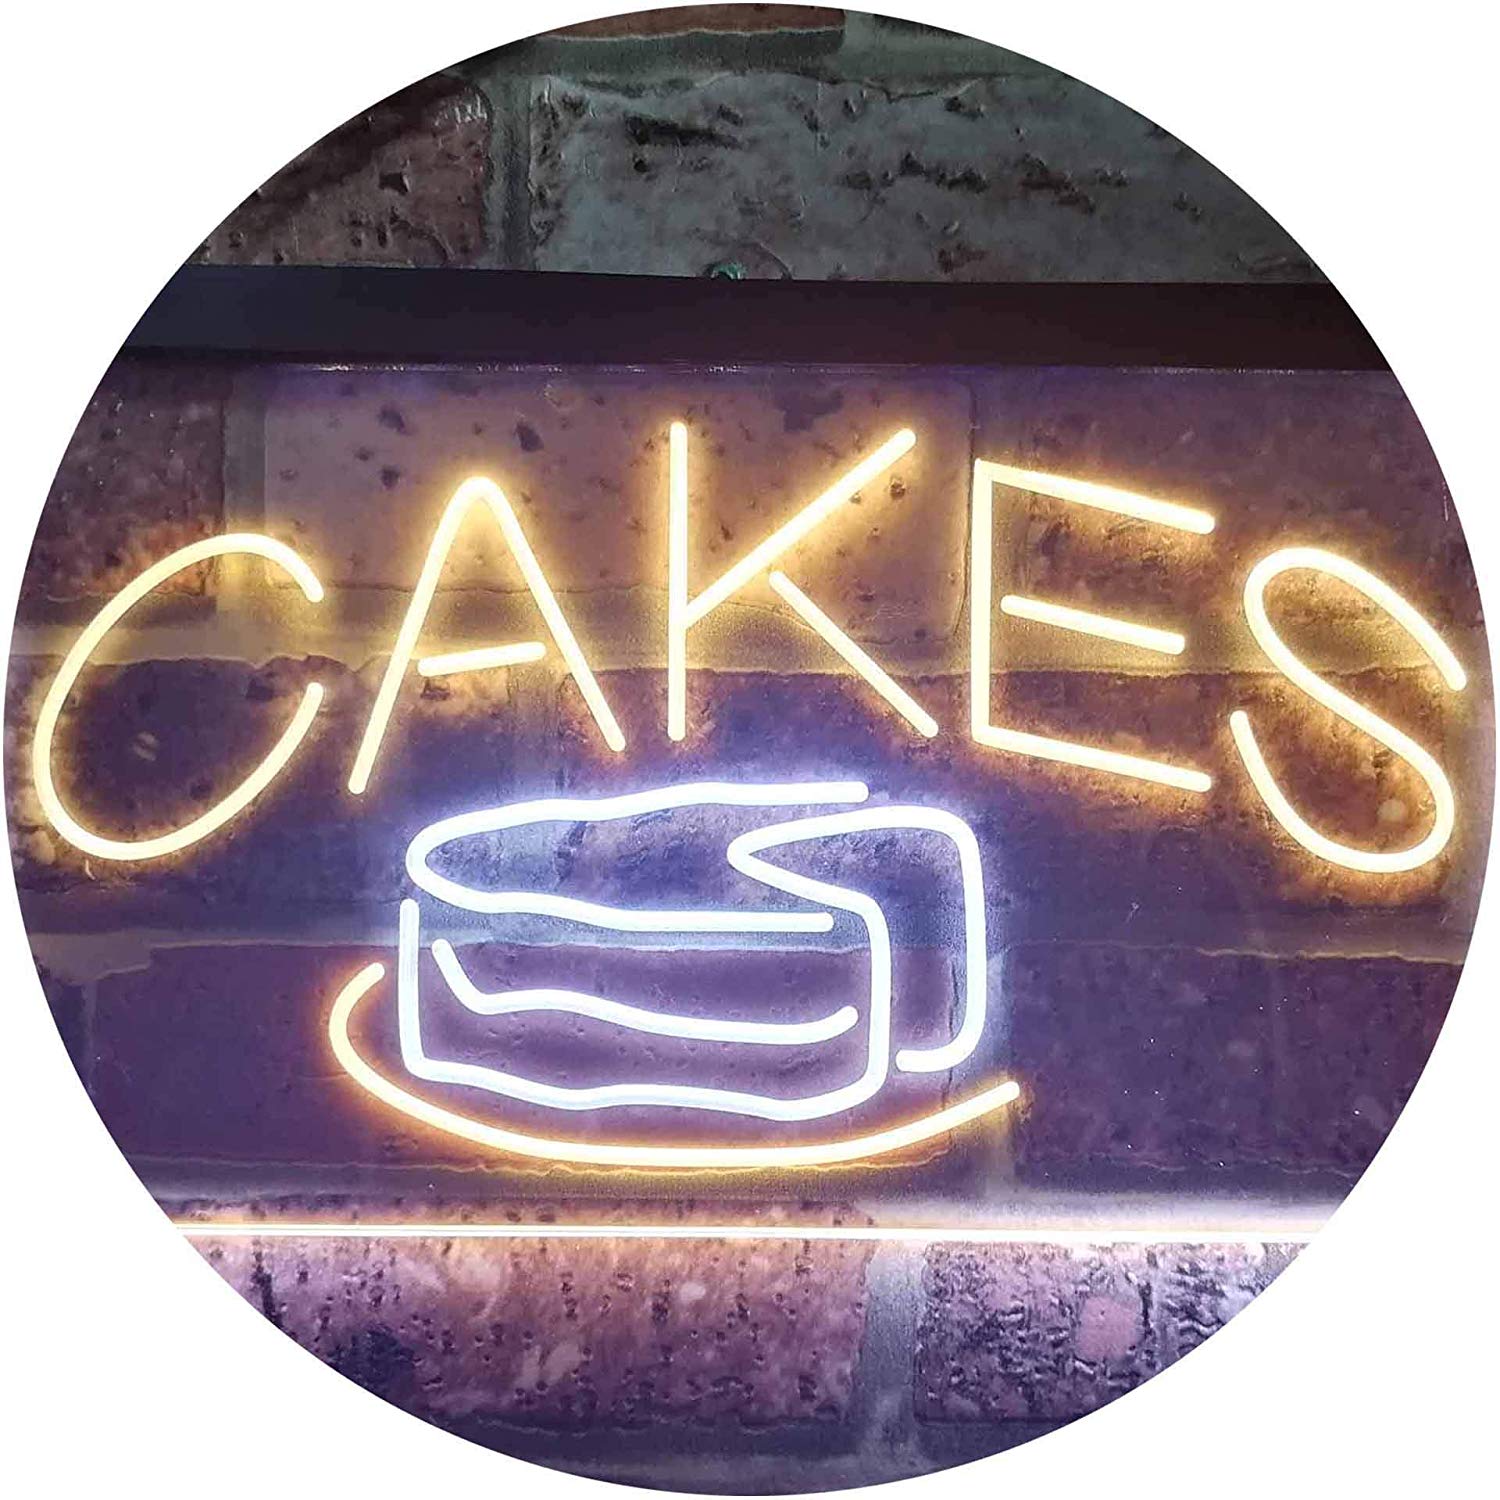 Neon Cake. Gambino's bakery sign, Metairie LA since 1949. 🍰  @gambinosbakery | Instagram